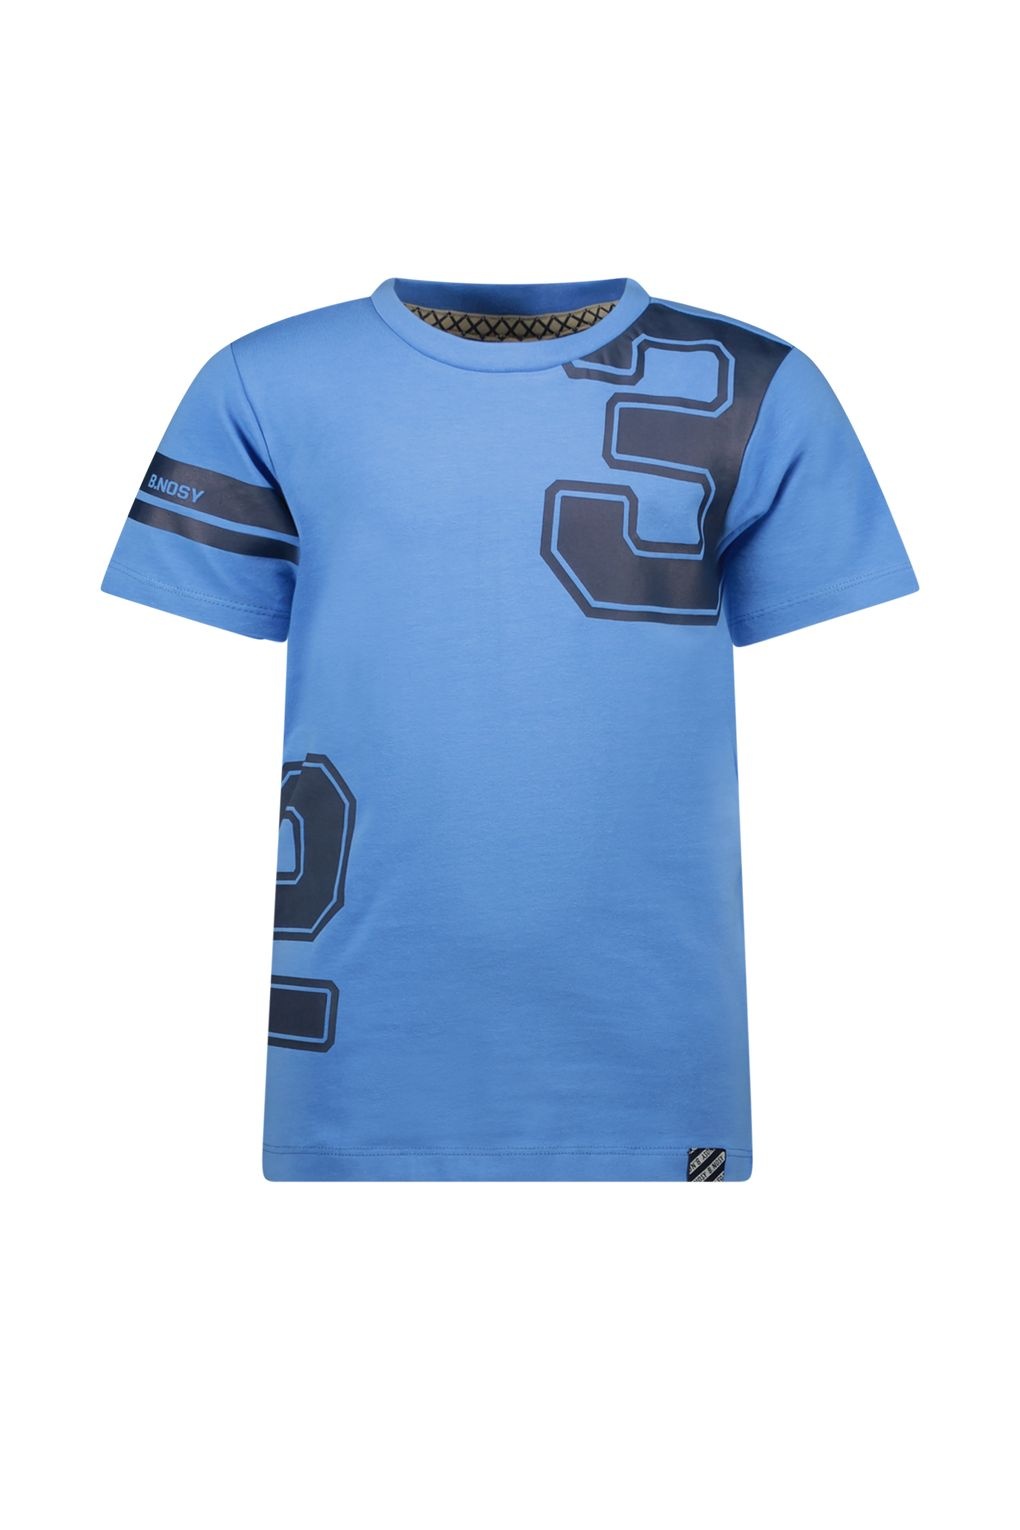 B. Nosy Y402-6412 Jongens T-shirt - Soft Blue - Maat 116